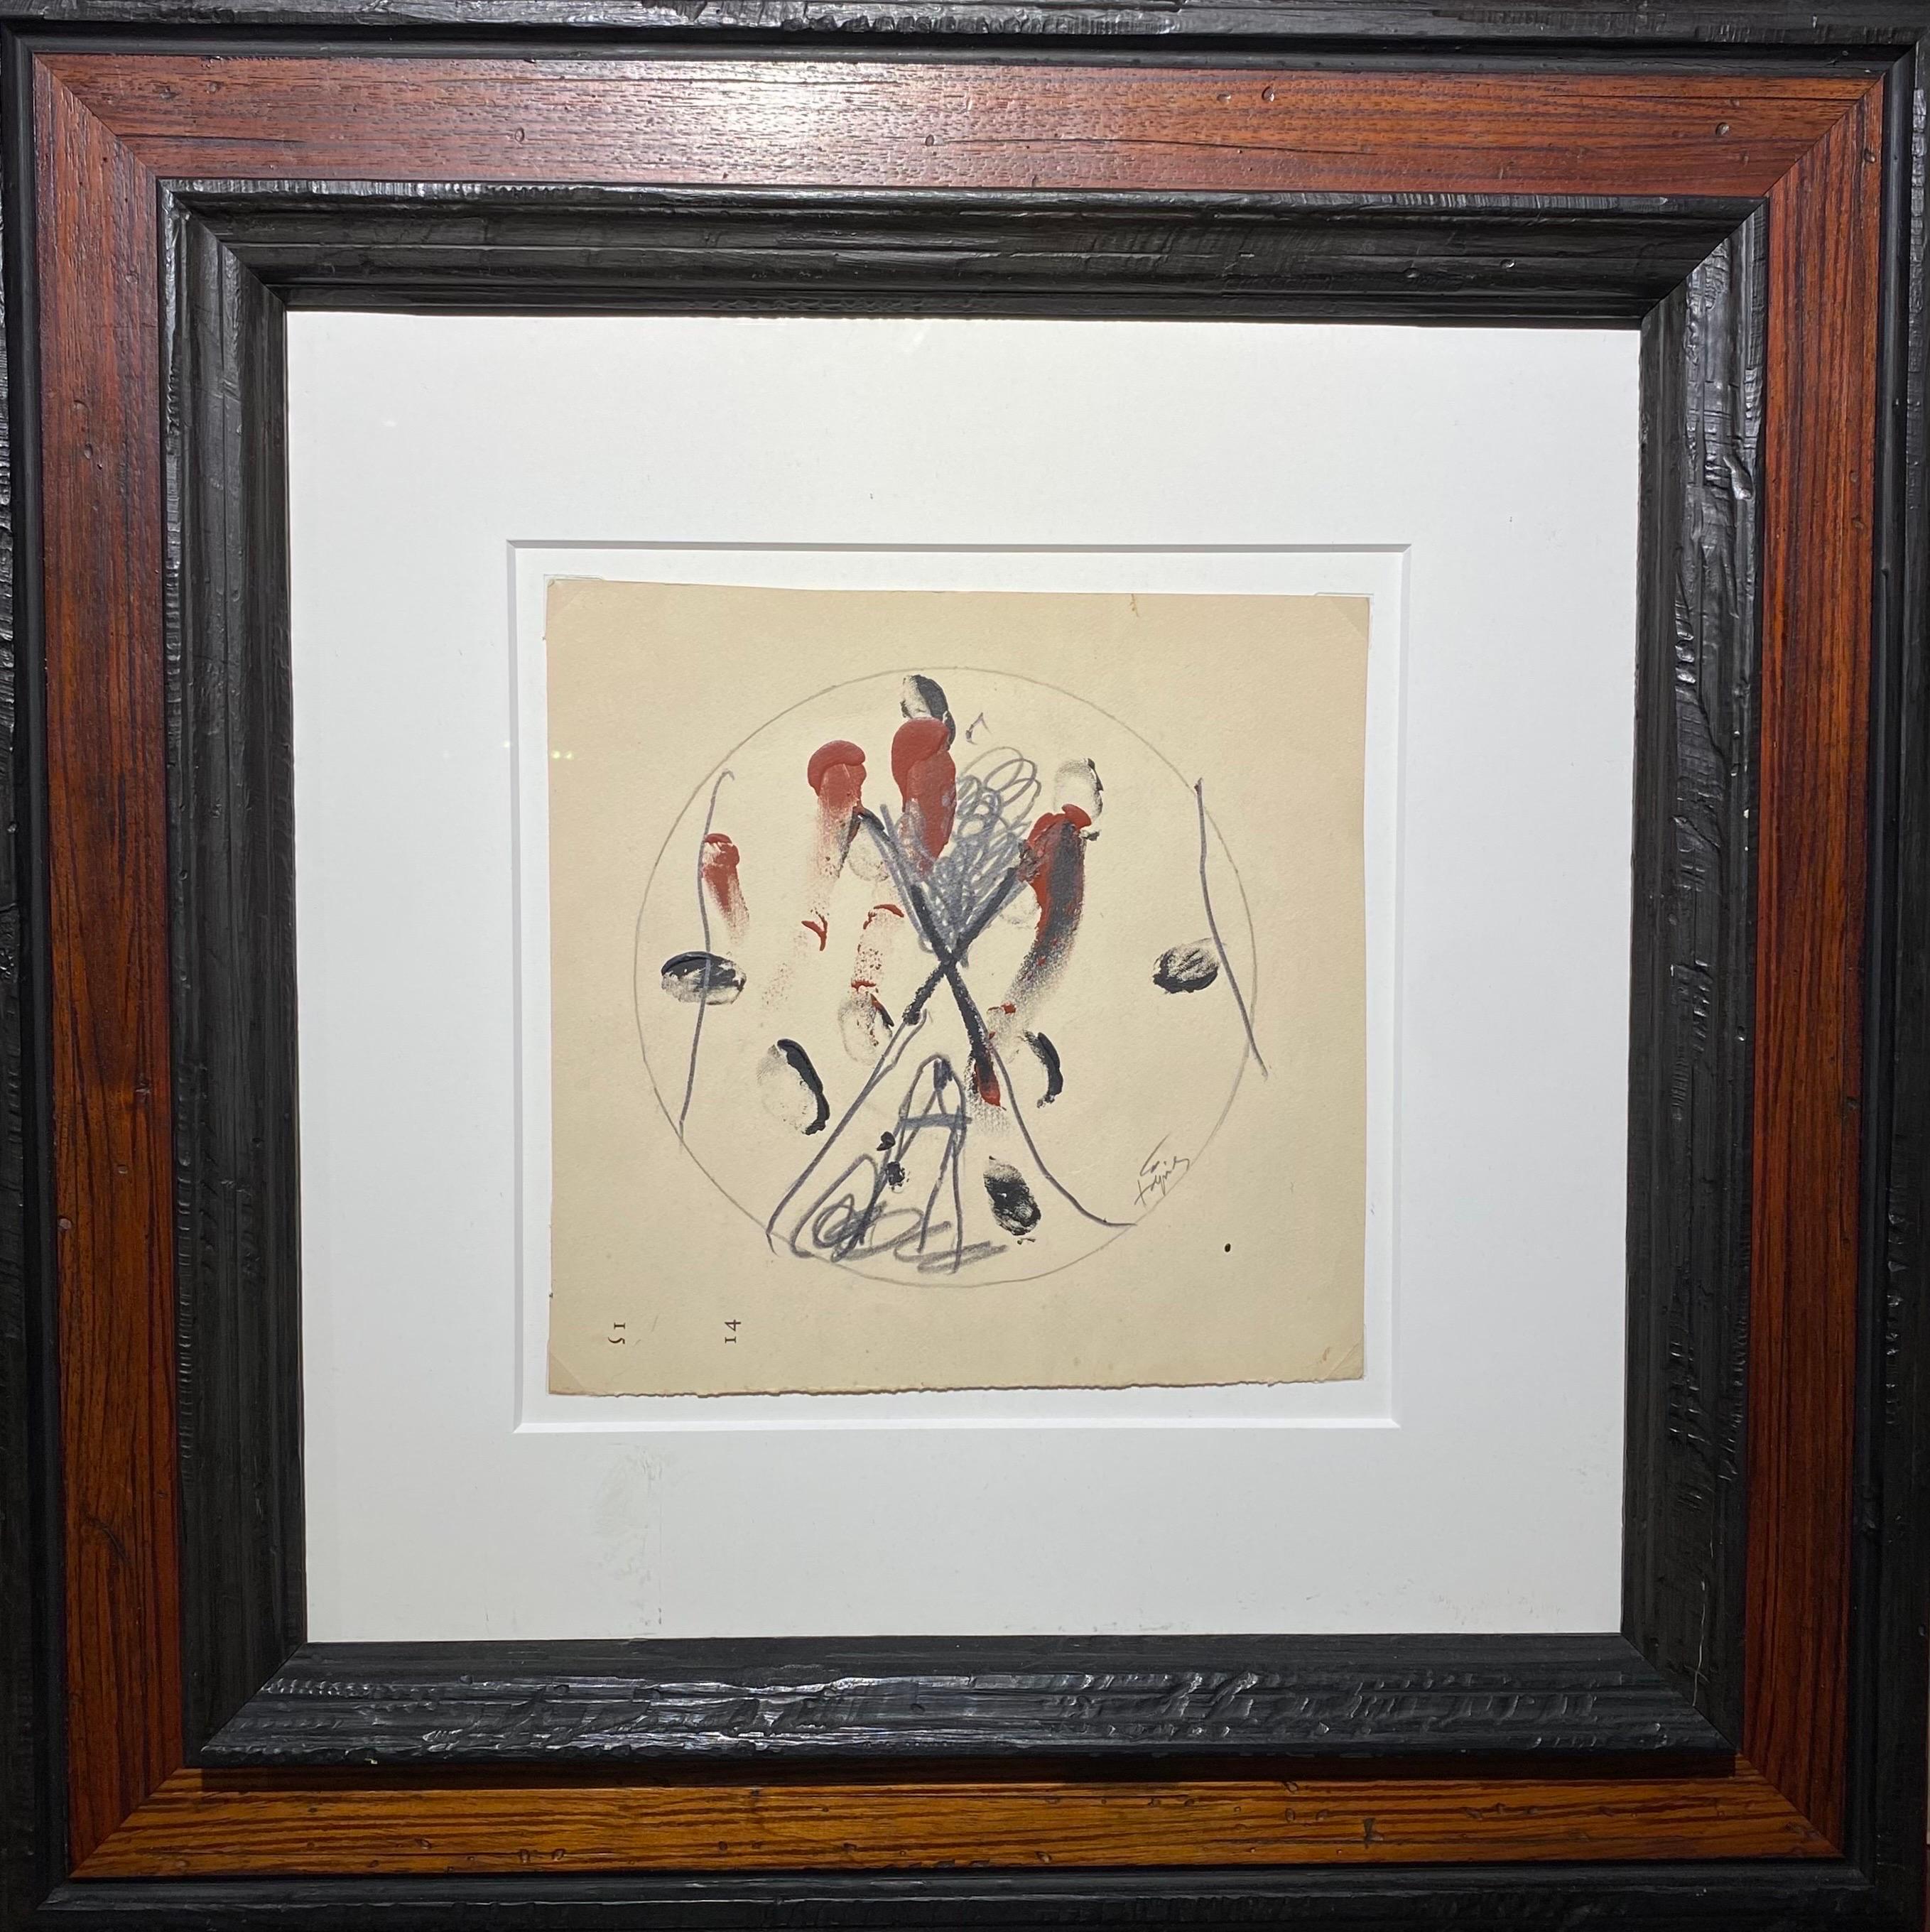 Antoni Tàpies Abstract Drawing - Antoni Tapies
Oval oil